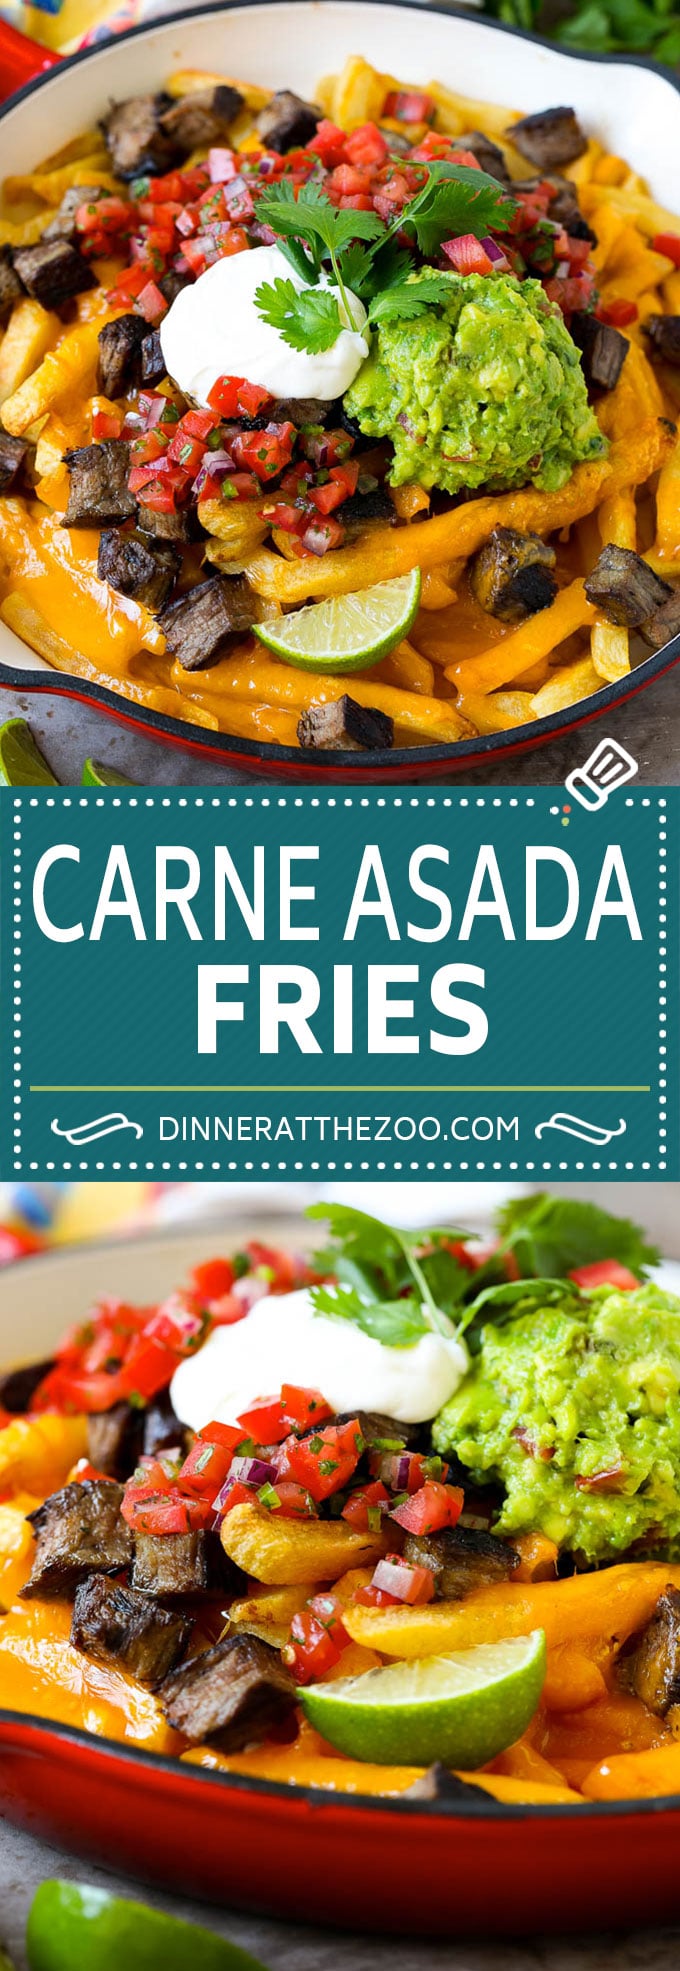 Carne Asada Fries Recipe | Steak Fries #fries #frenchfries #steak #salsa #avocado #cheese #dinner #appetizer #dinneratthezoo